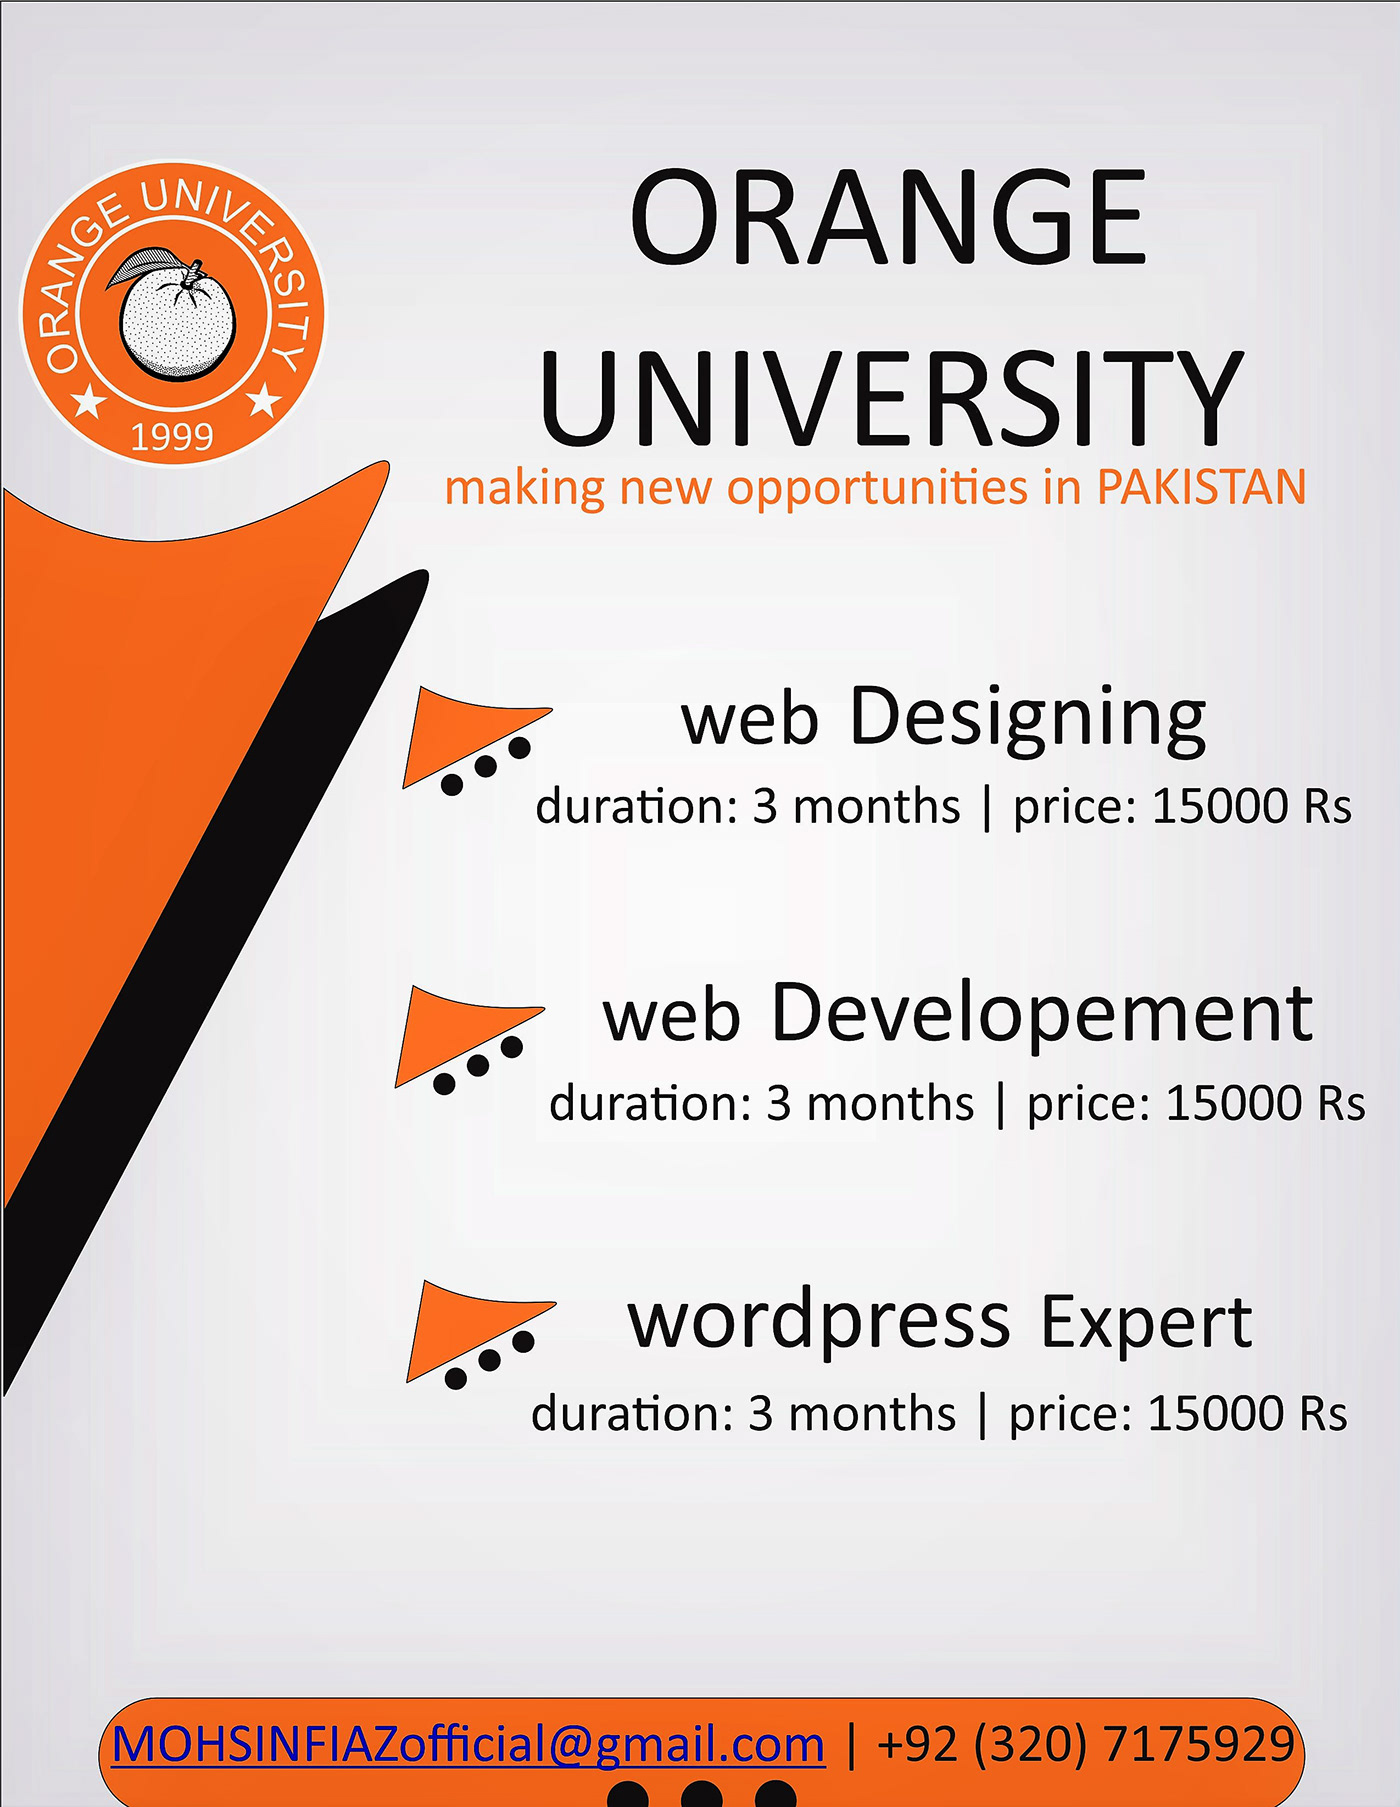 MOHSIN FIAZ designed Orange University